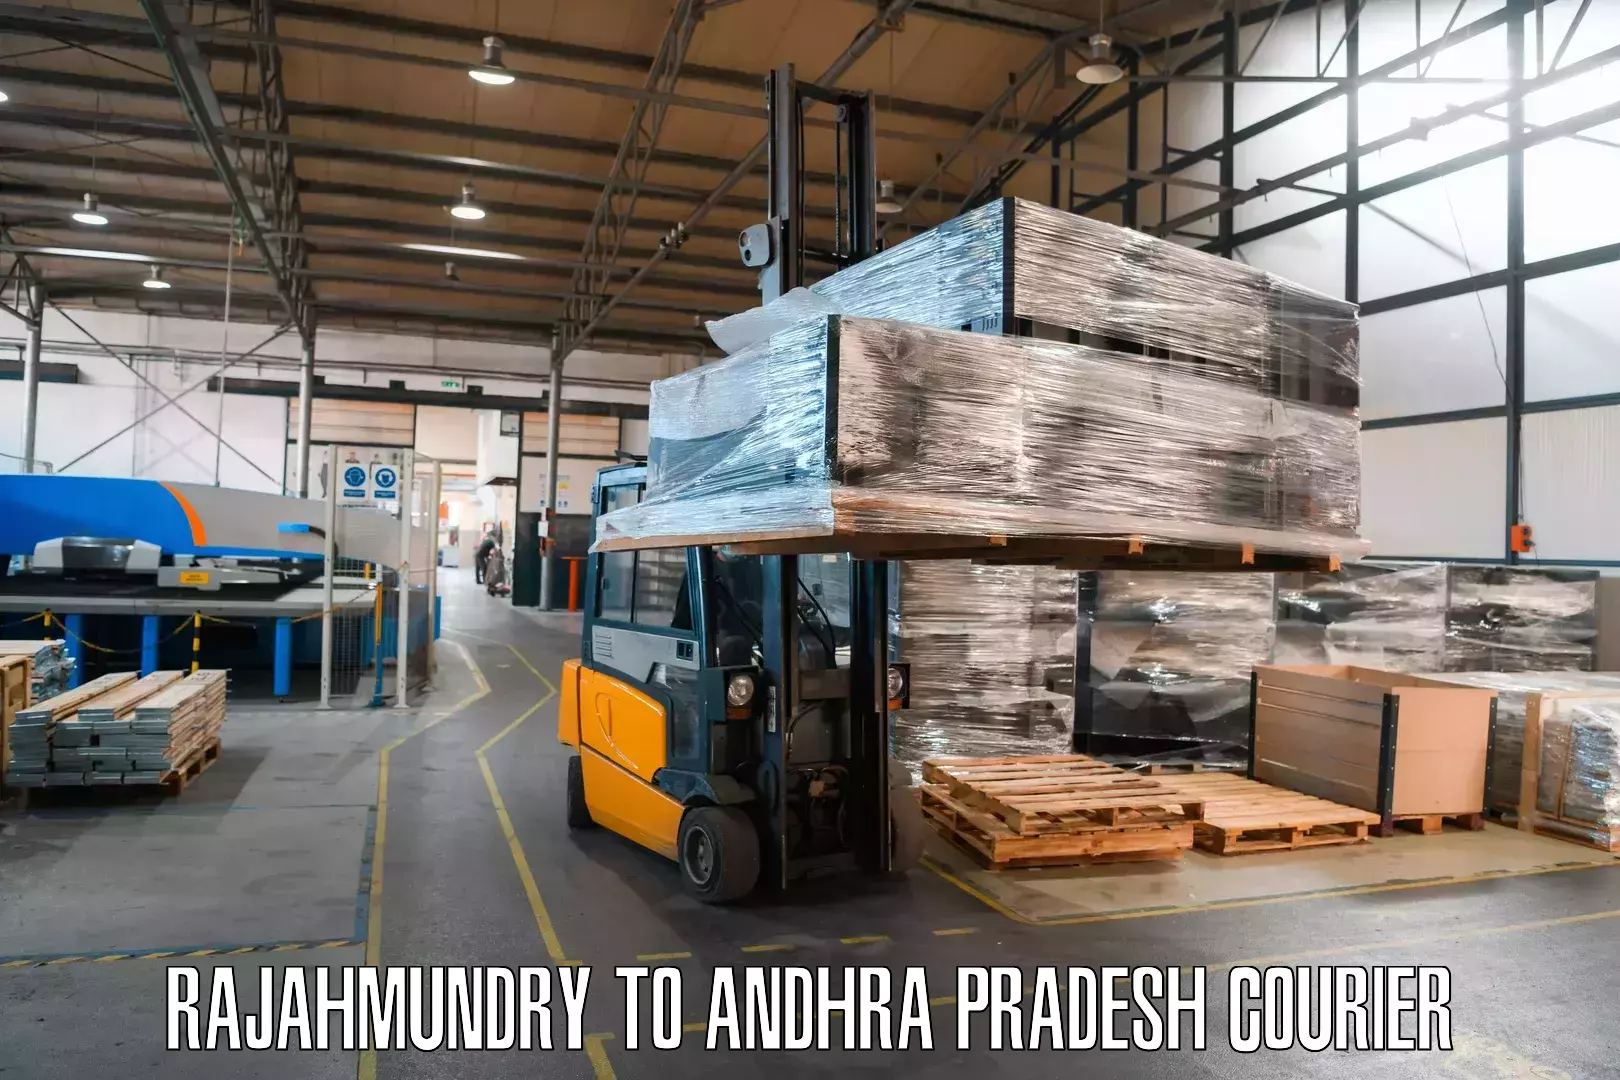 User-friendly courier app Rajahmundry to Andhra Pradesh